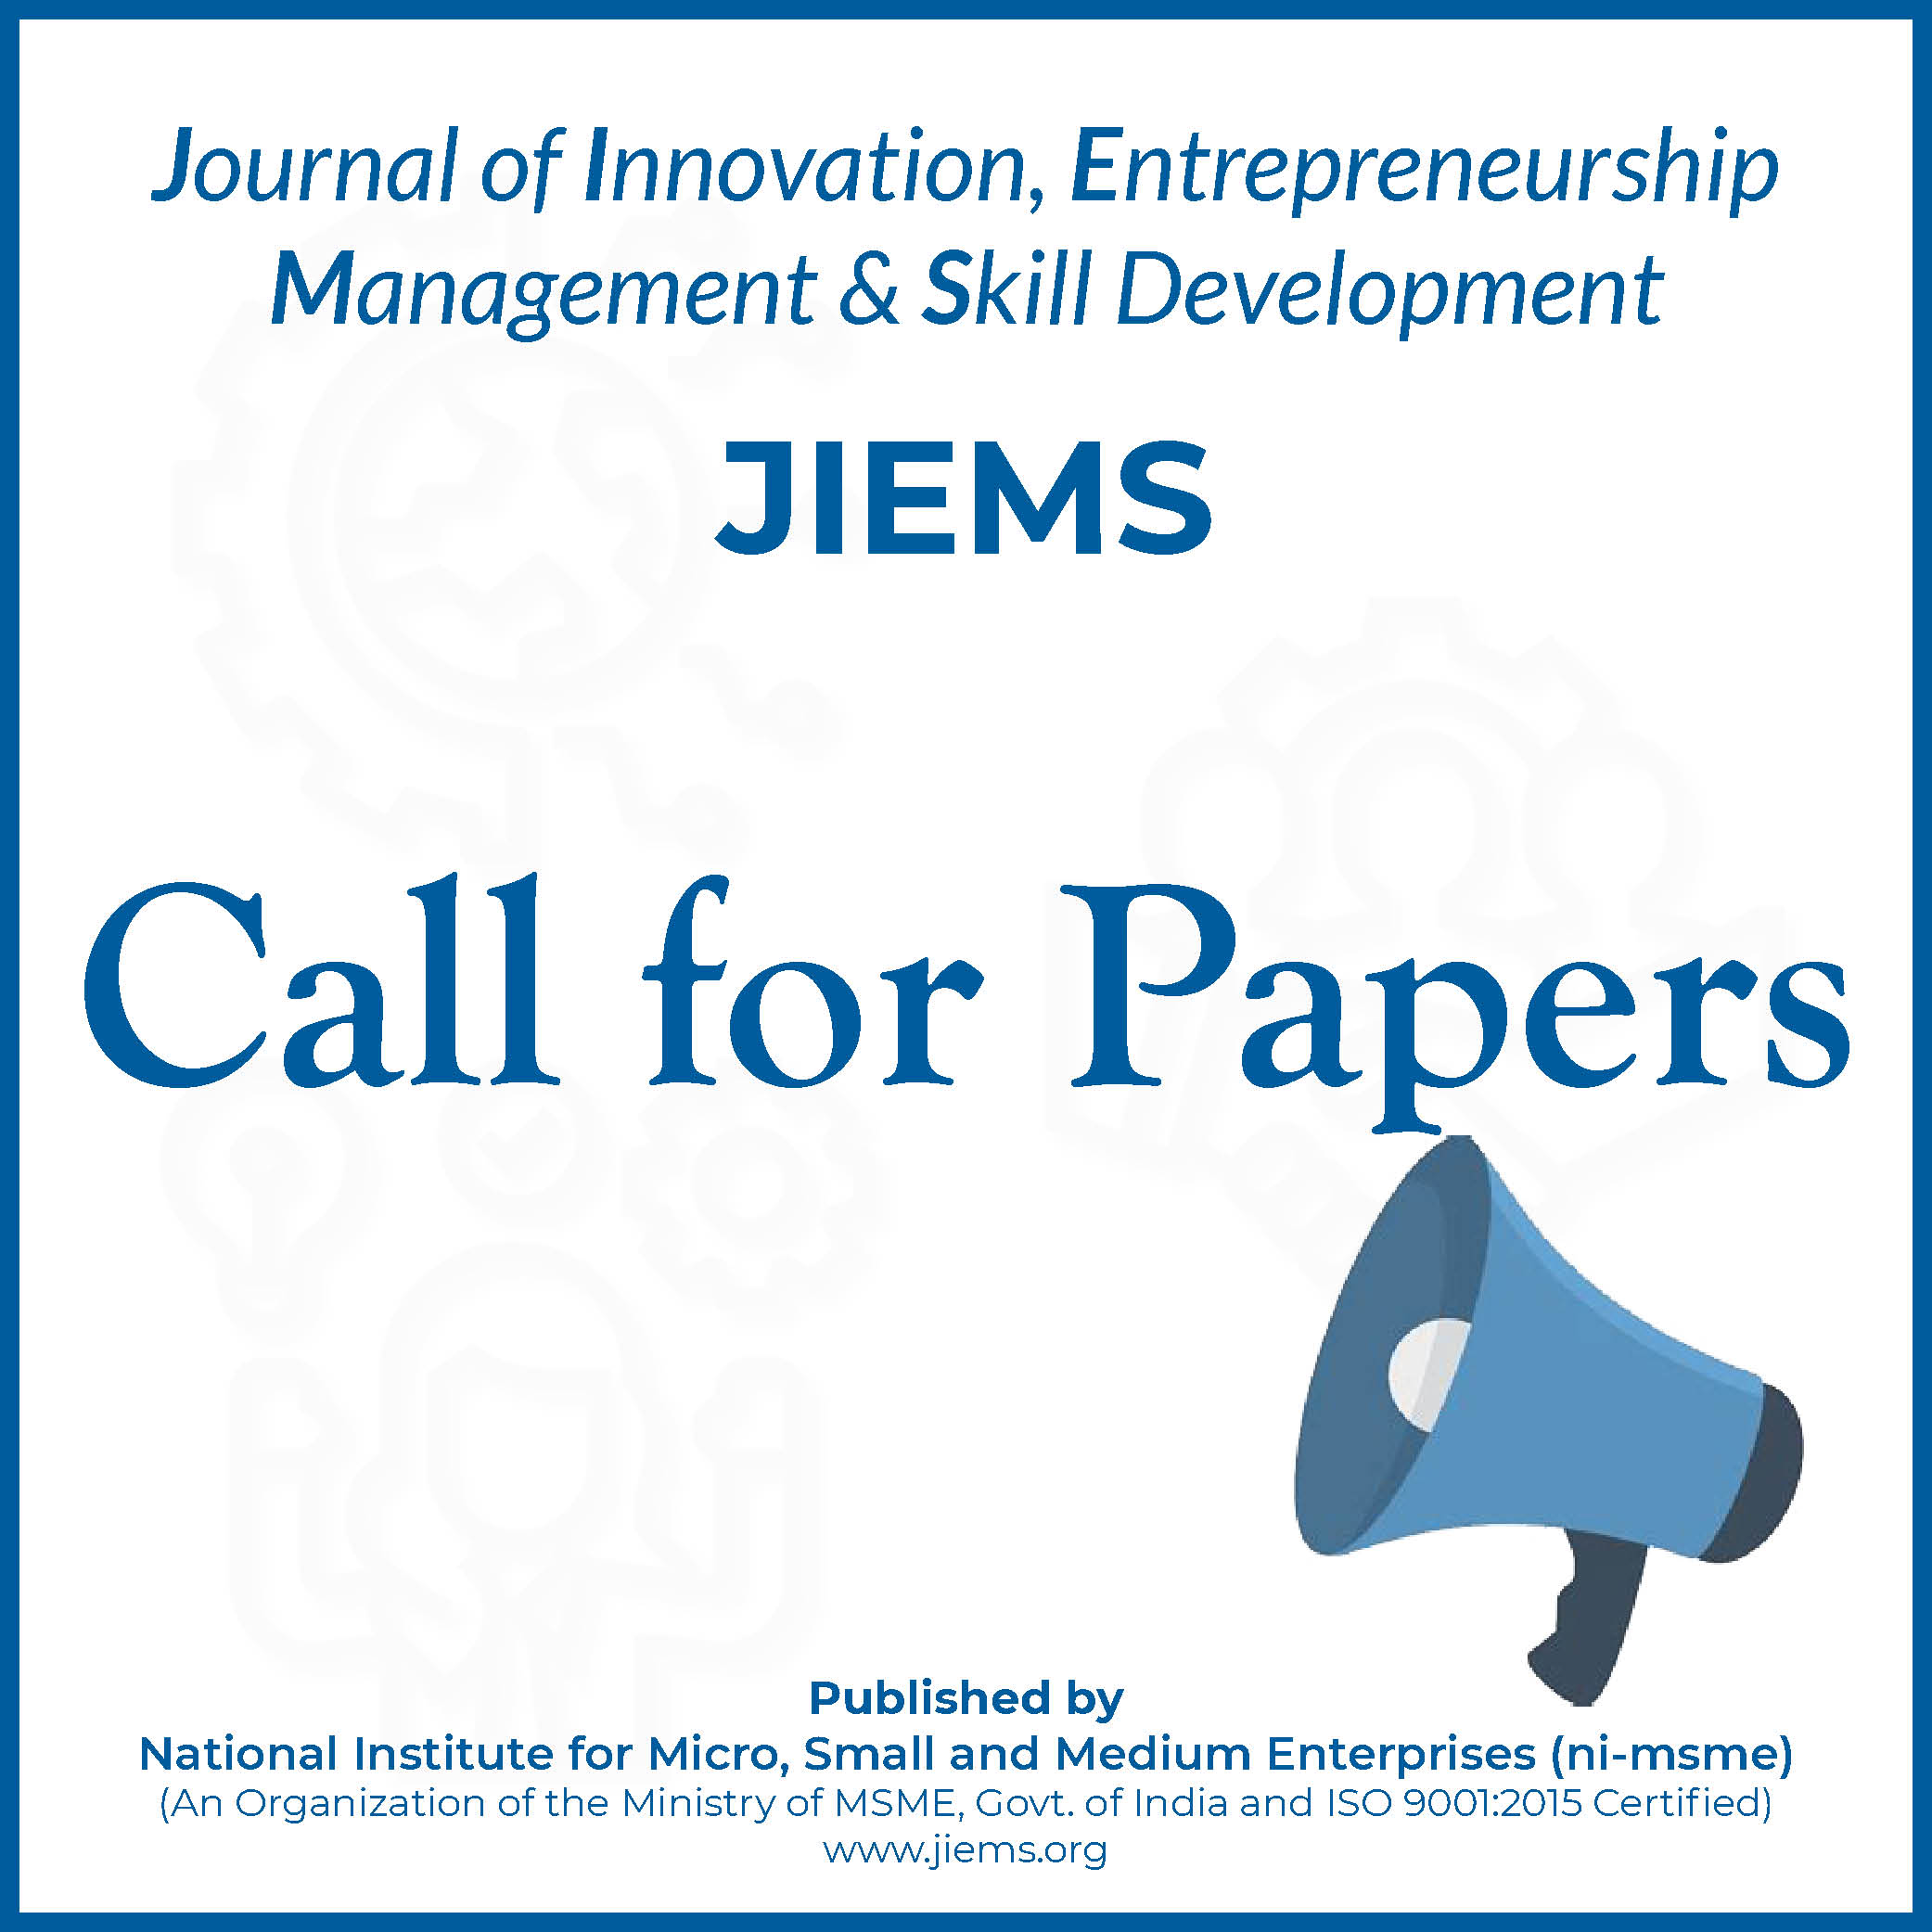  Call for papers - Journal of Innovation, Entrepreneurship, Management and Skill Development